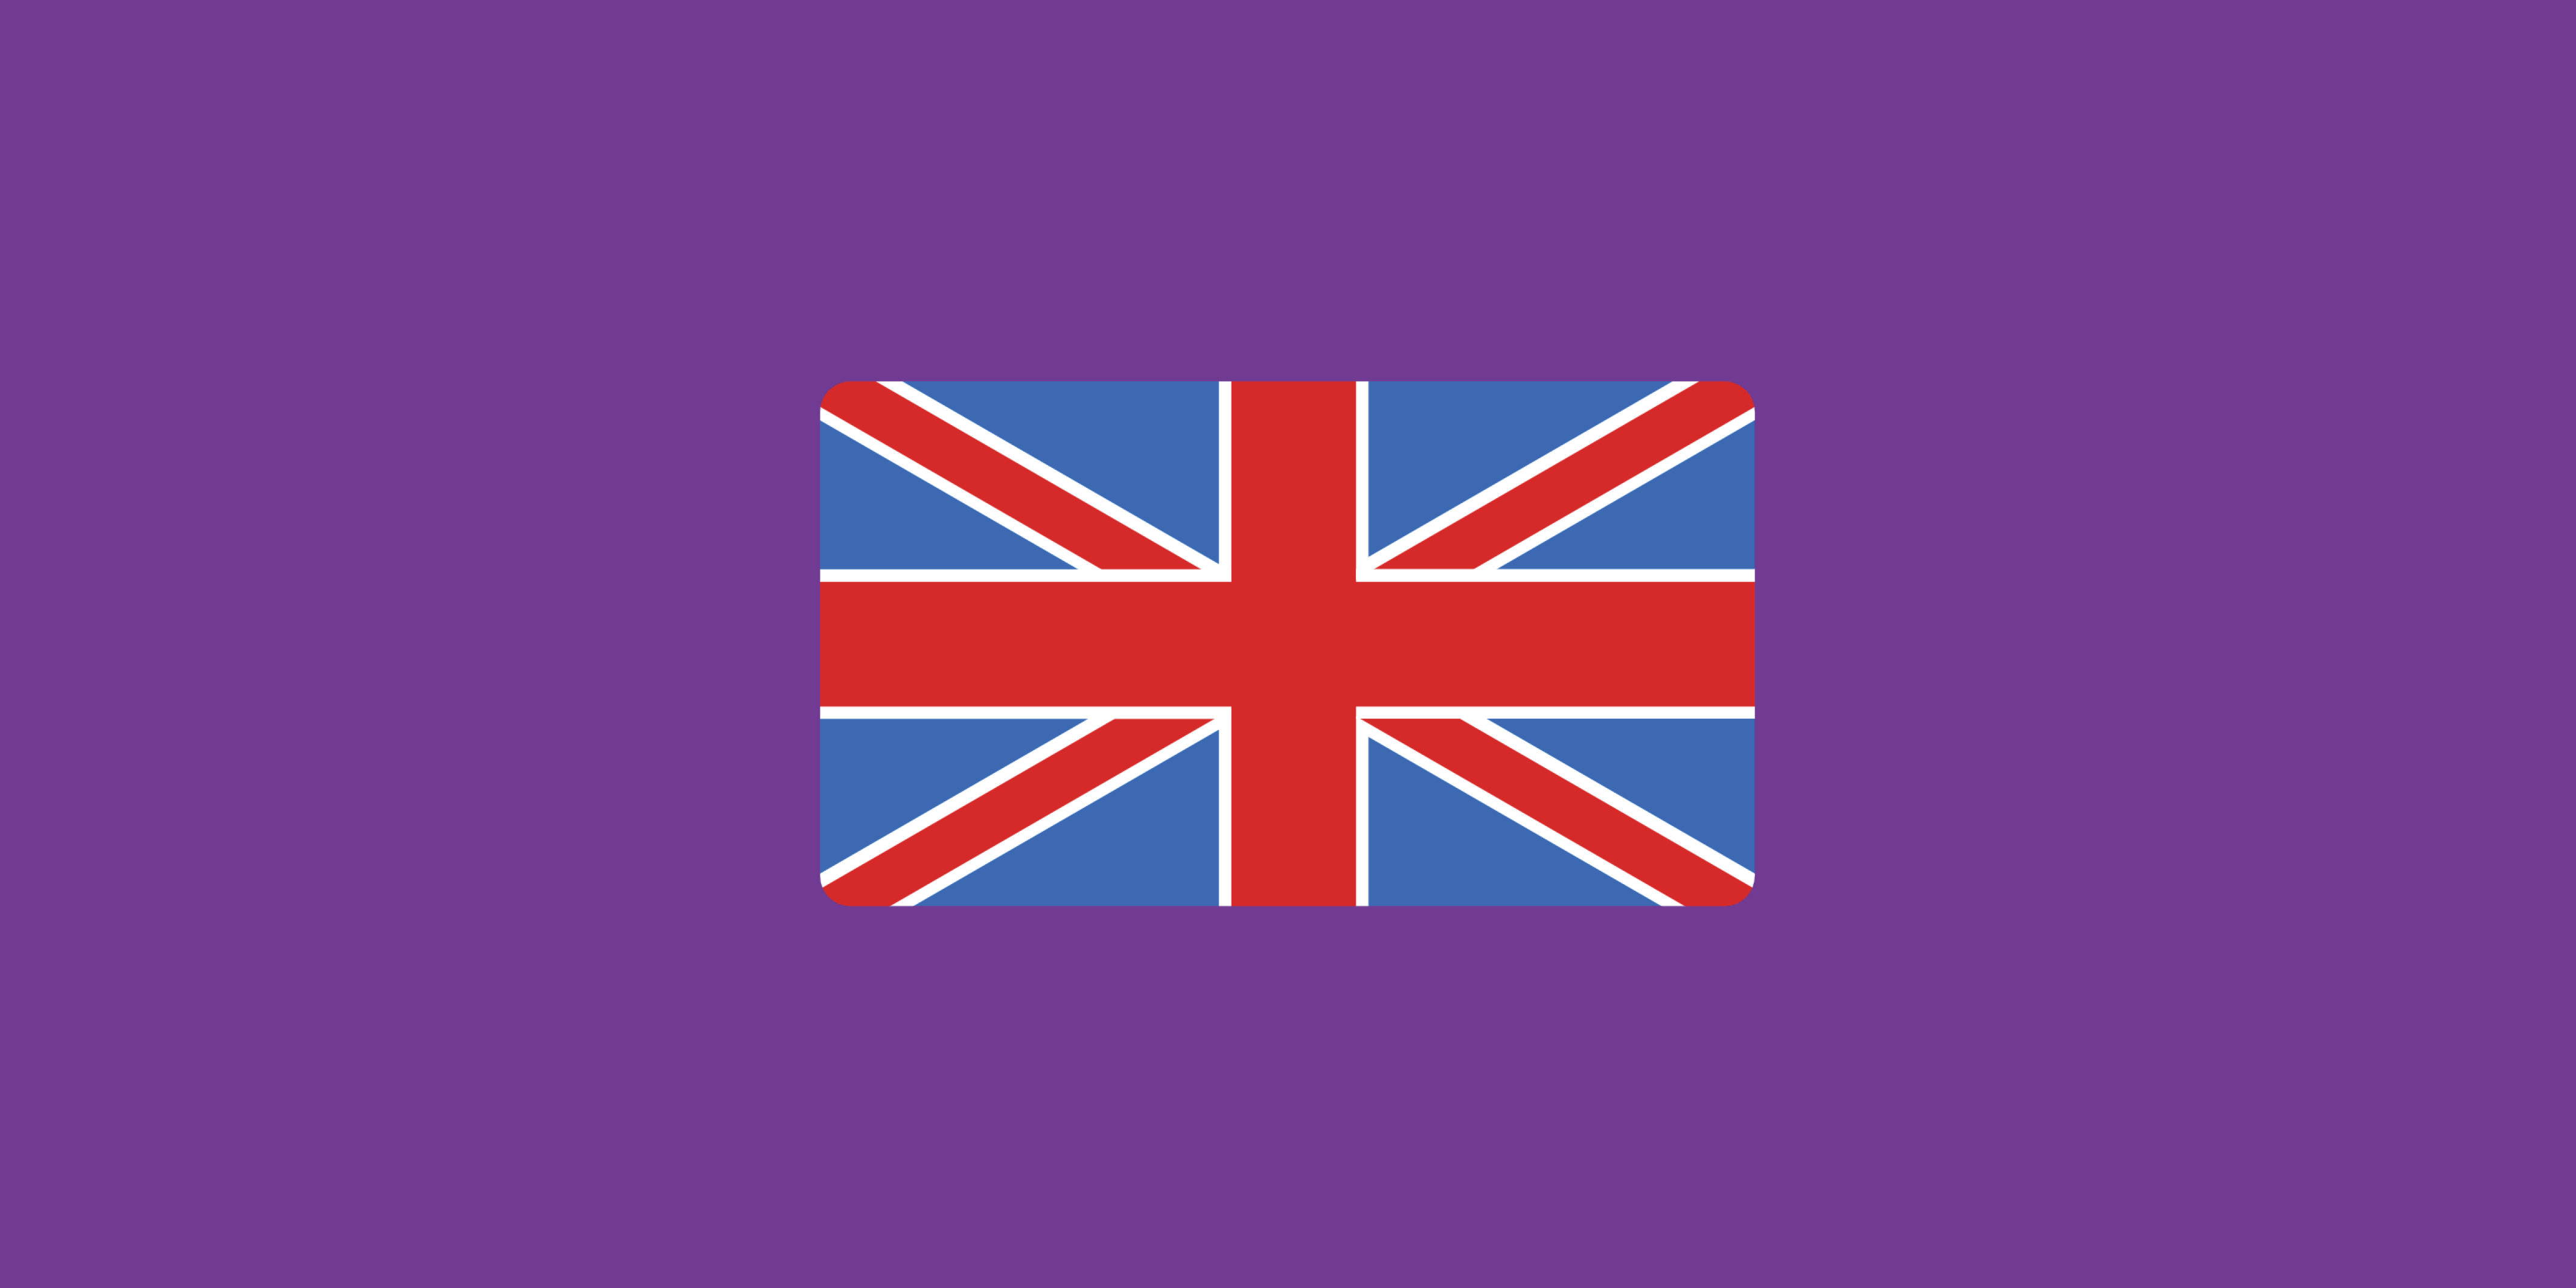 the flag of the United Kingdom